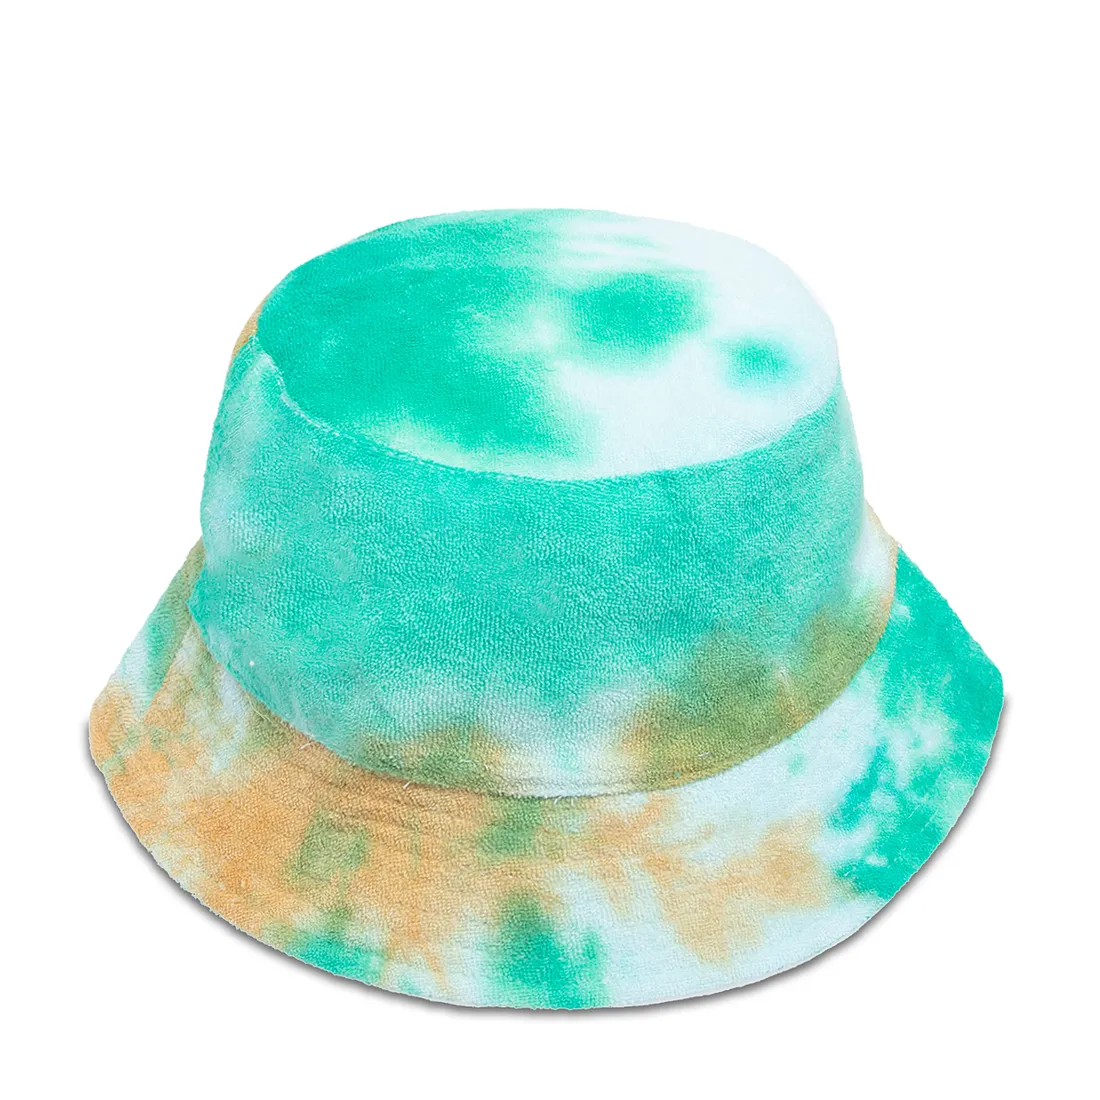 Tie dye bucket hat green & blue - GIRLS 7-15 YEARS Accessories | Ackermans